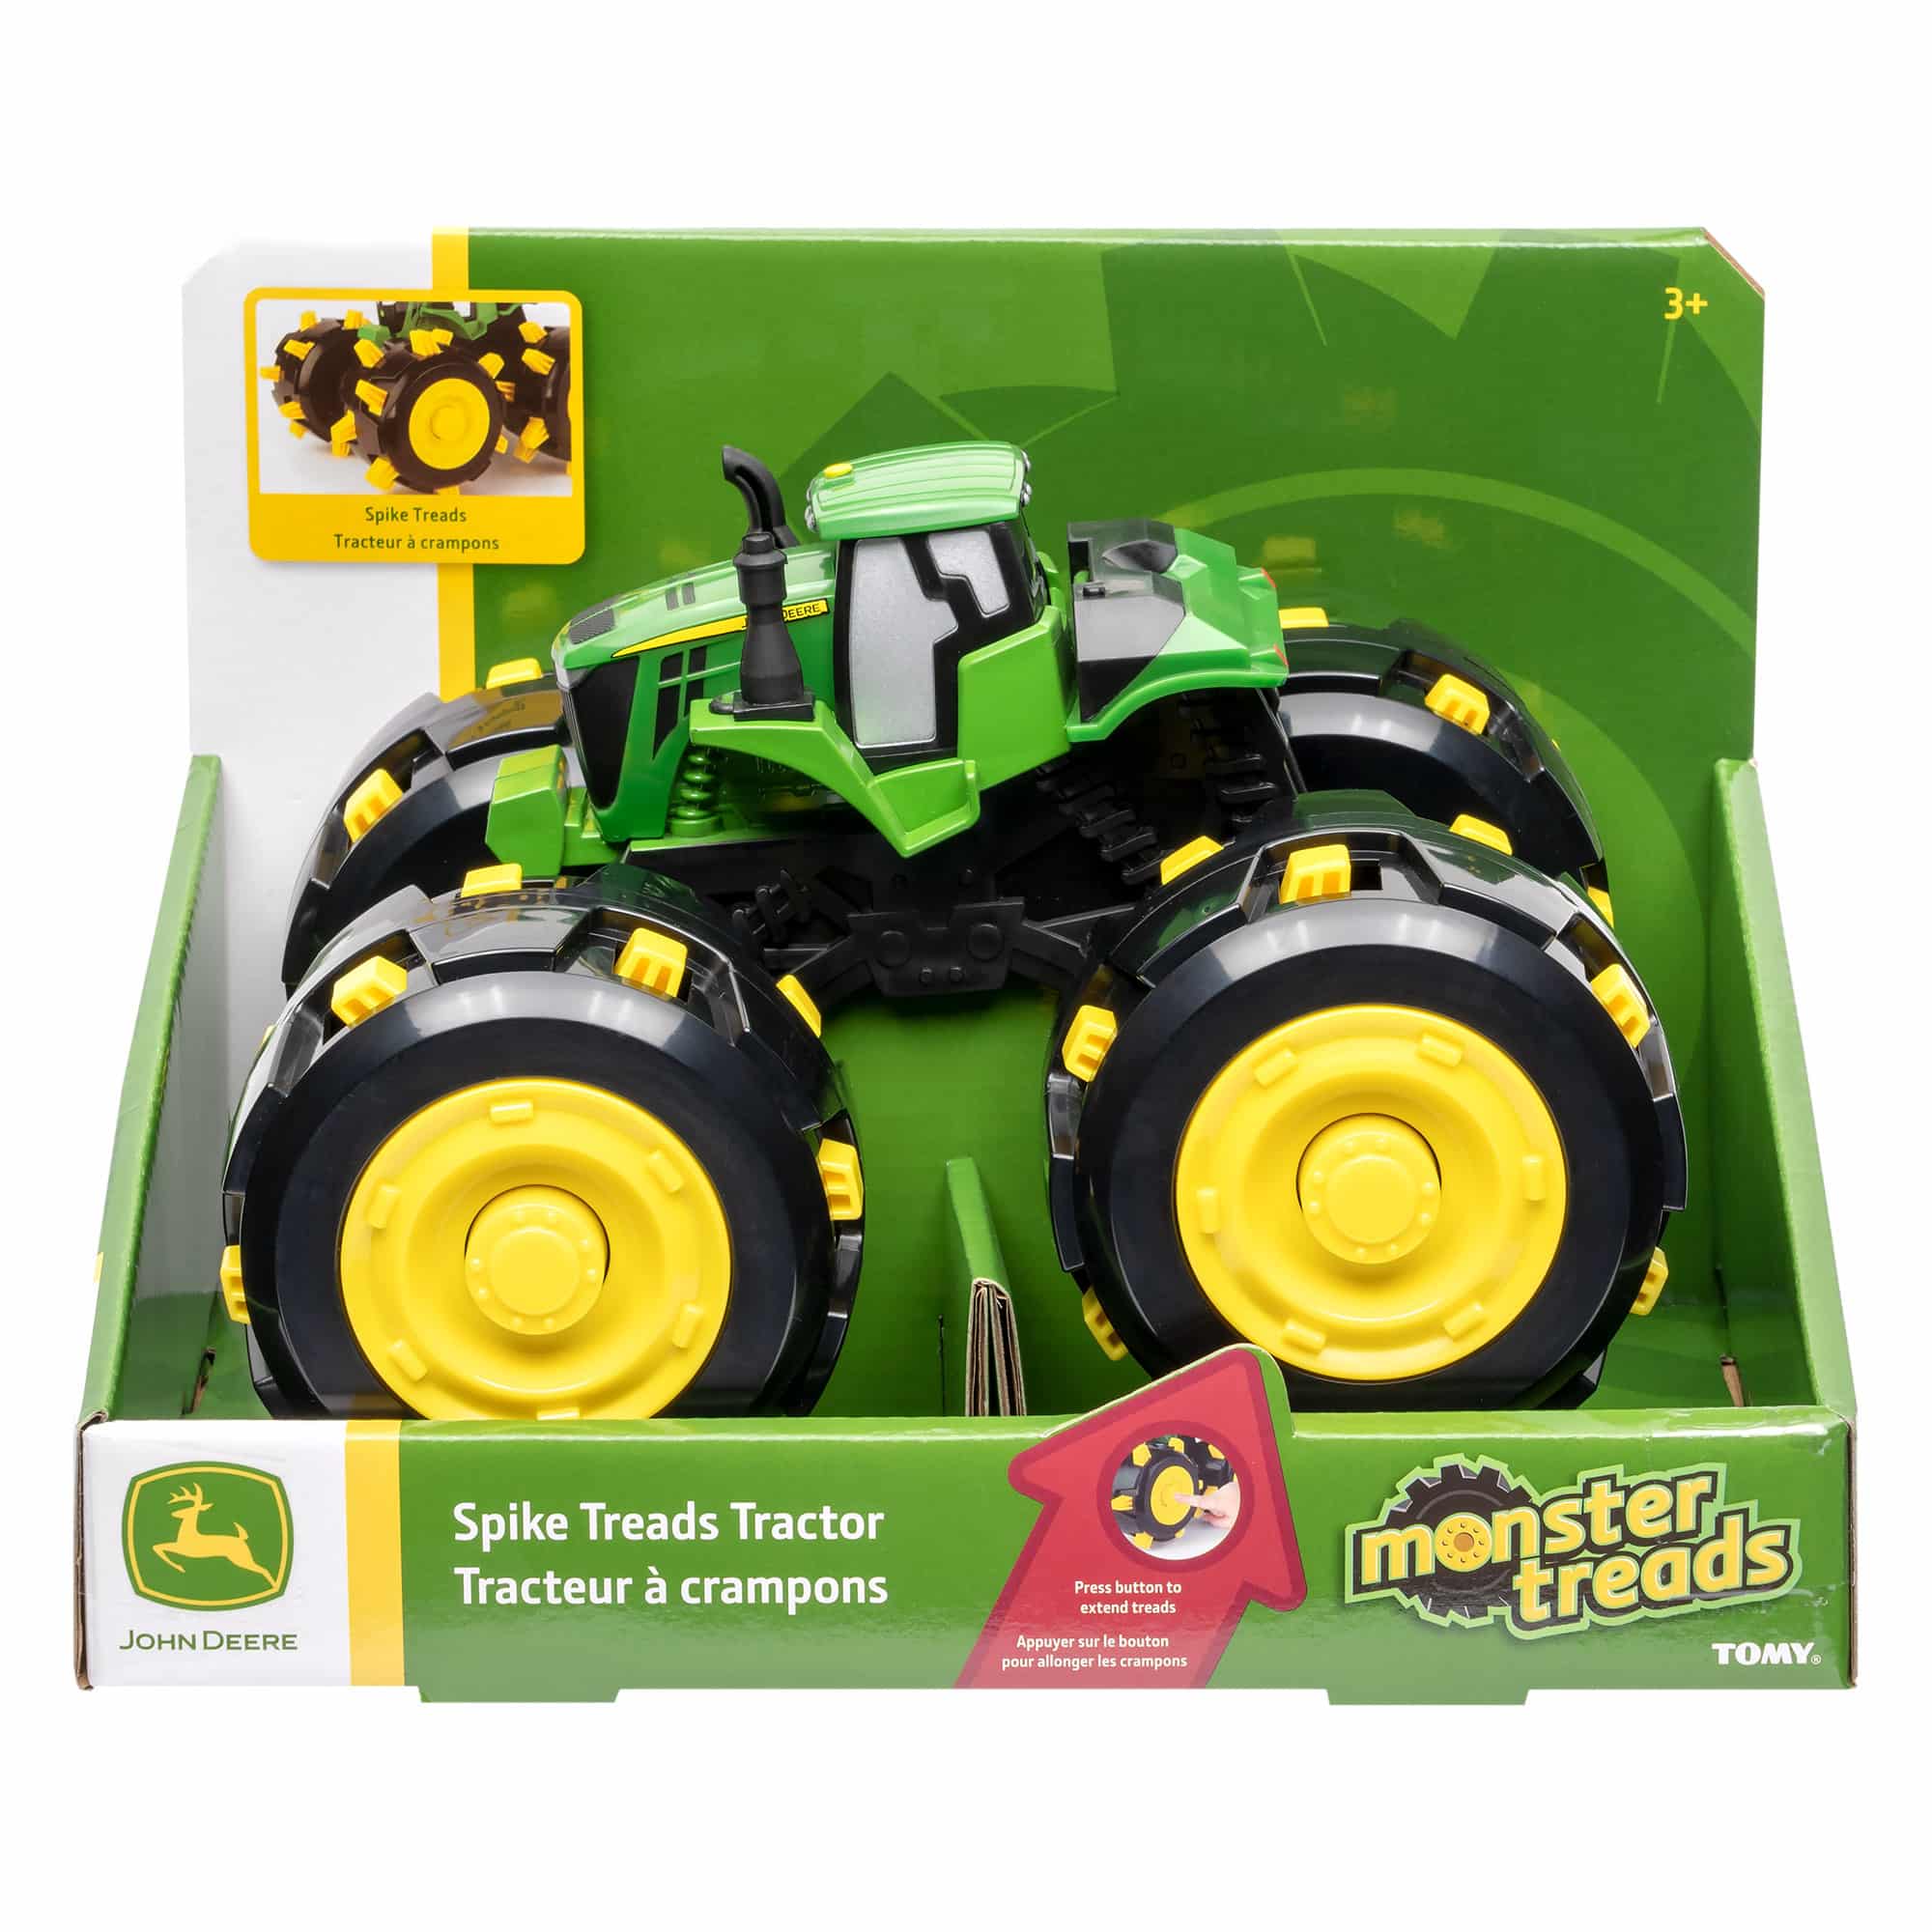 John Deere - Monster Treads - Spike Treads Tractor